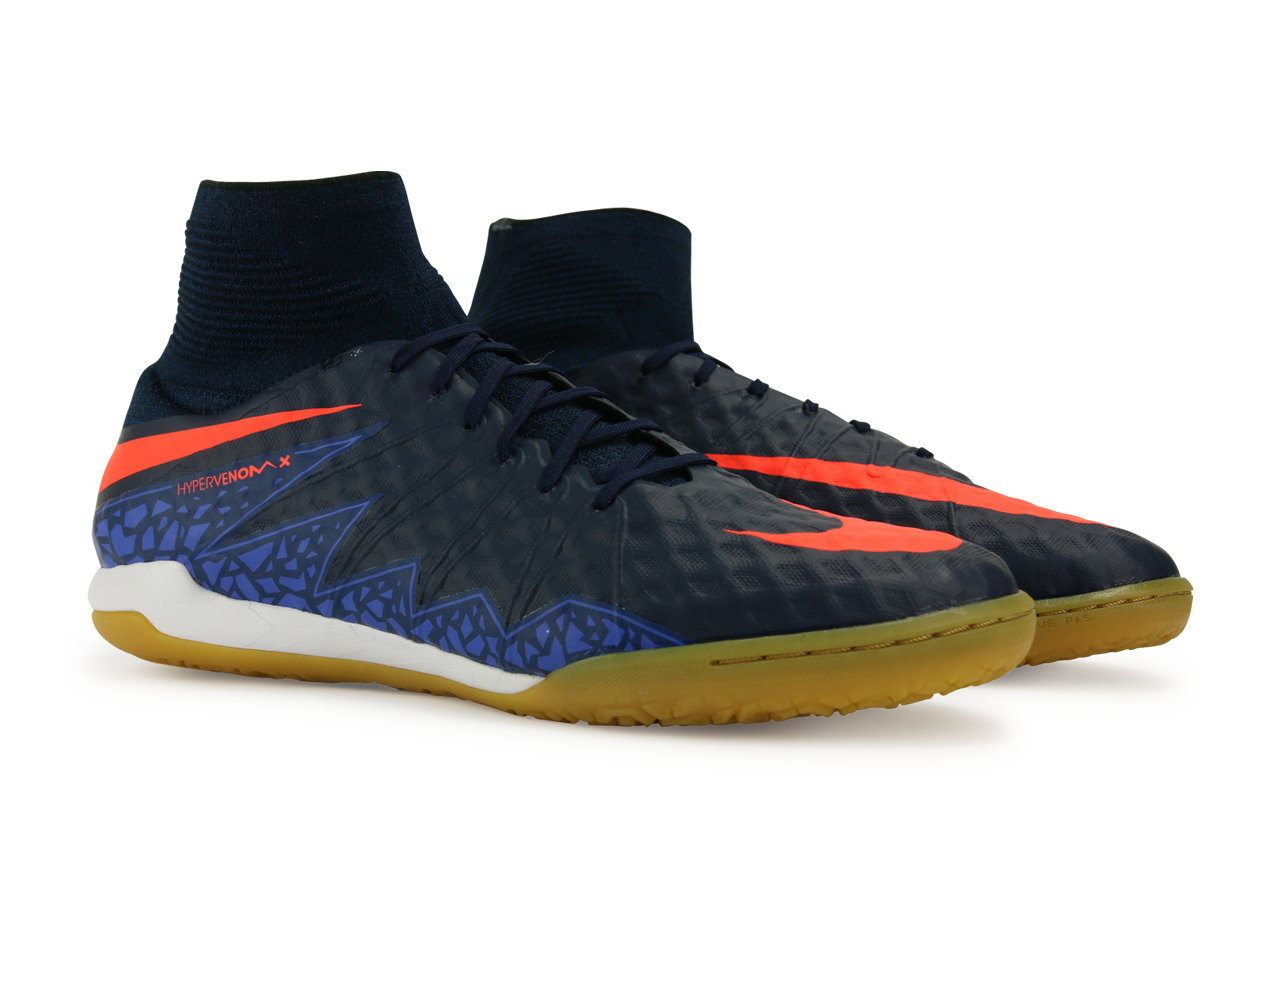 Nike Men's HypervenomX Proximo Indoor Soccer Shoes Obsidian/Total Crimson/Coastal Blue